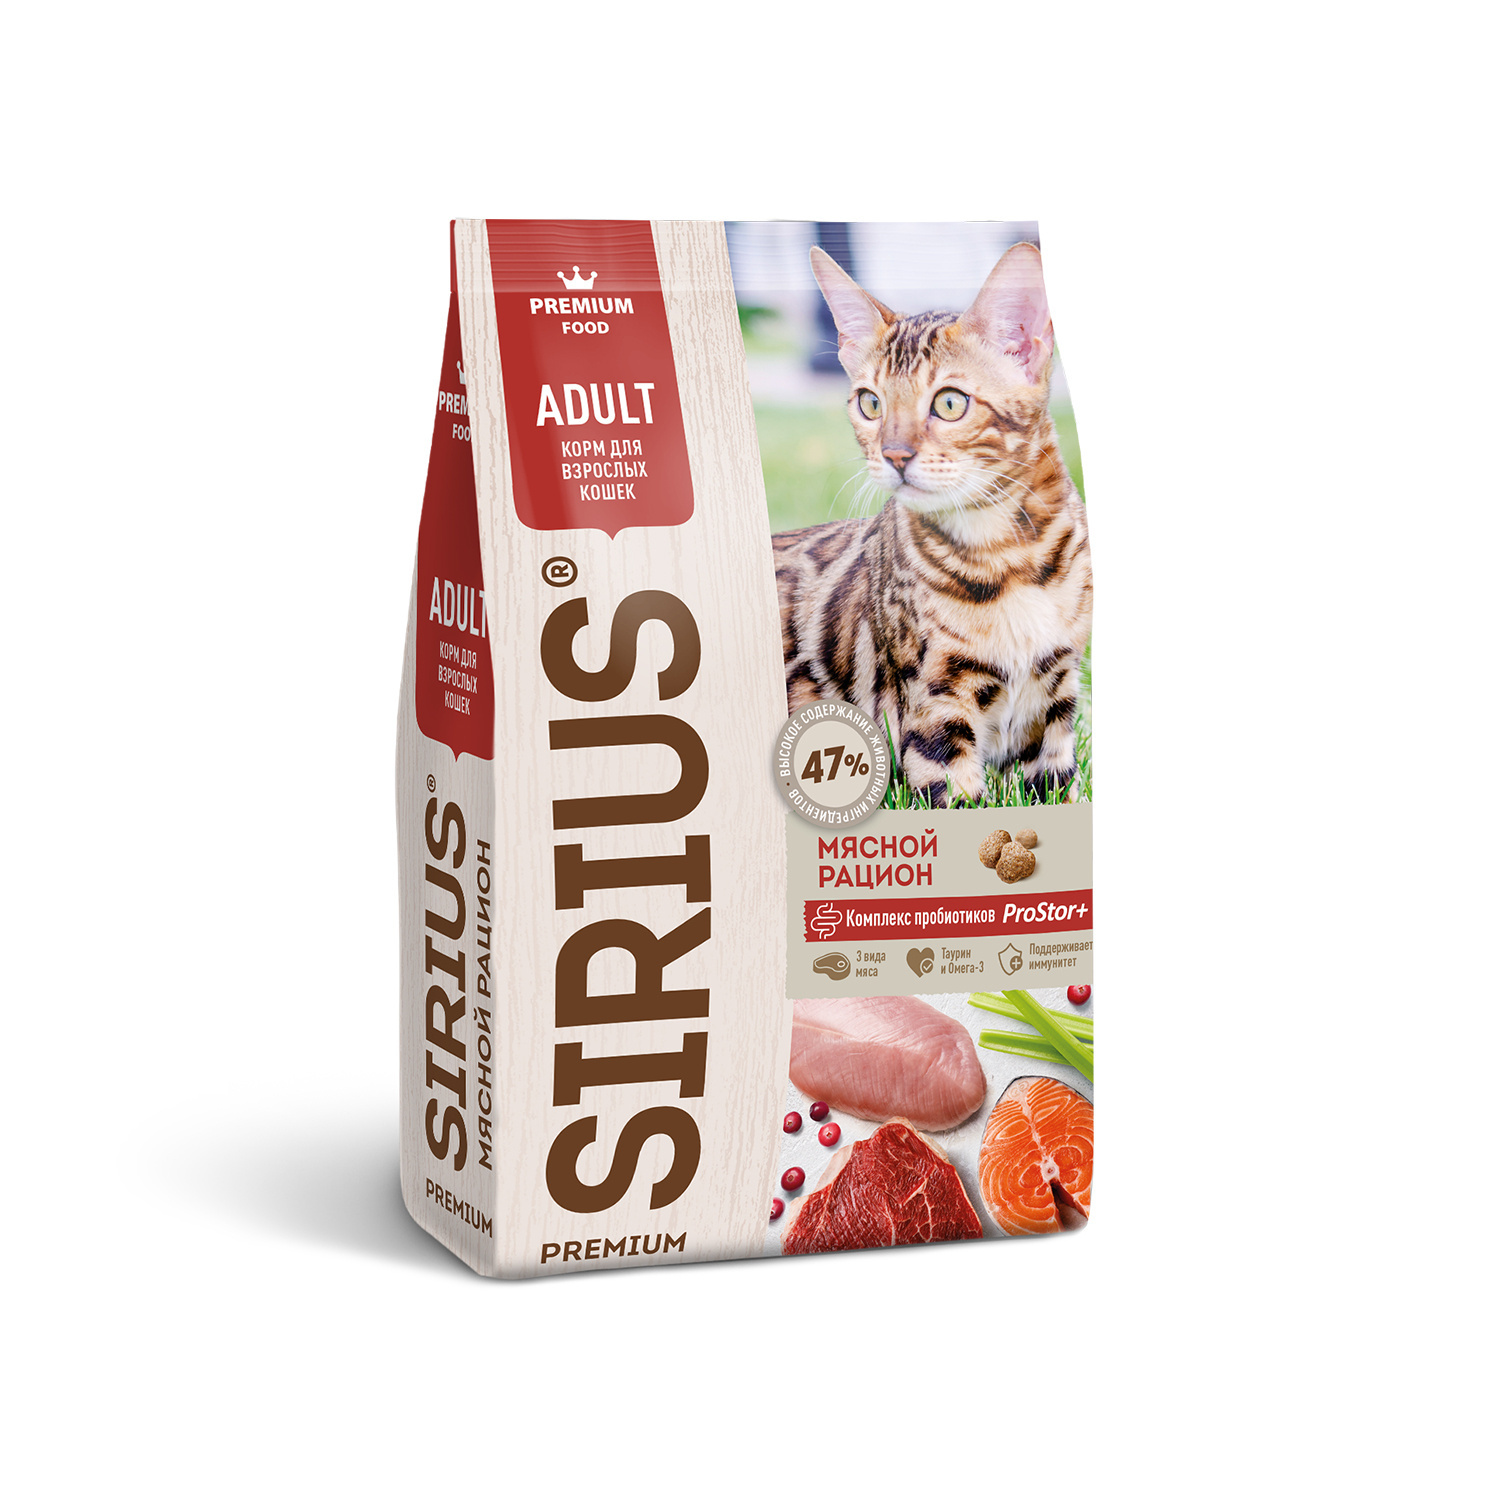 Sirius Sirius сухой корм для кошек, мясной рацион (1,5 кг) sirius sirius сухой корм для котят с мясом индейки 1 5 кг